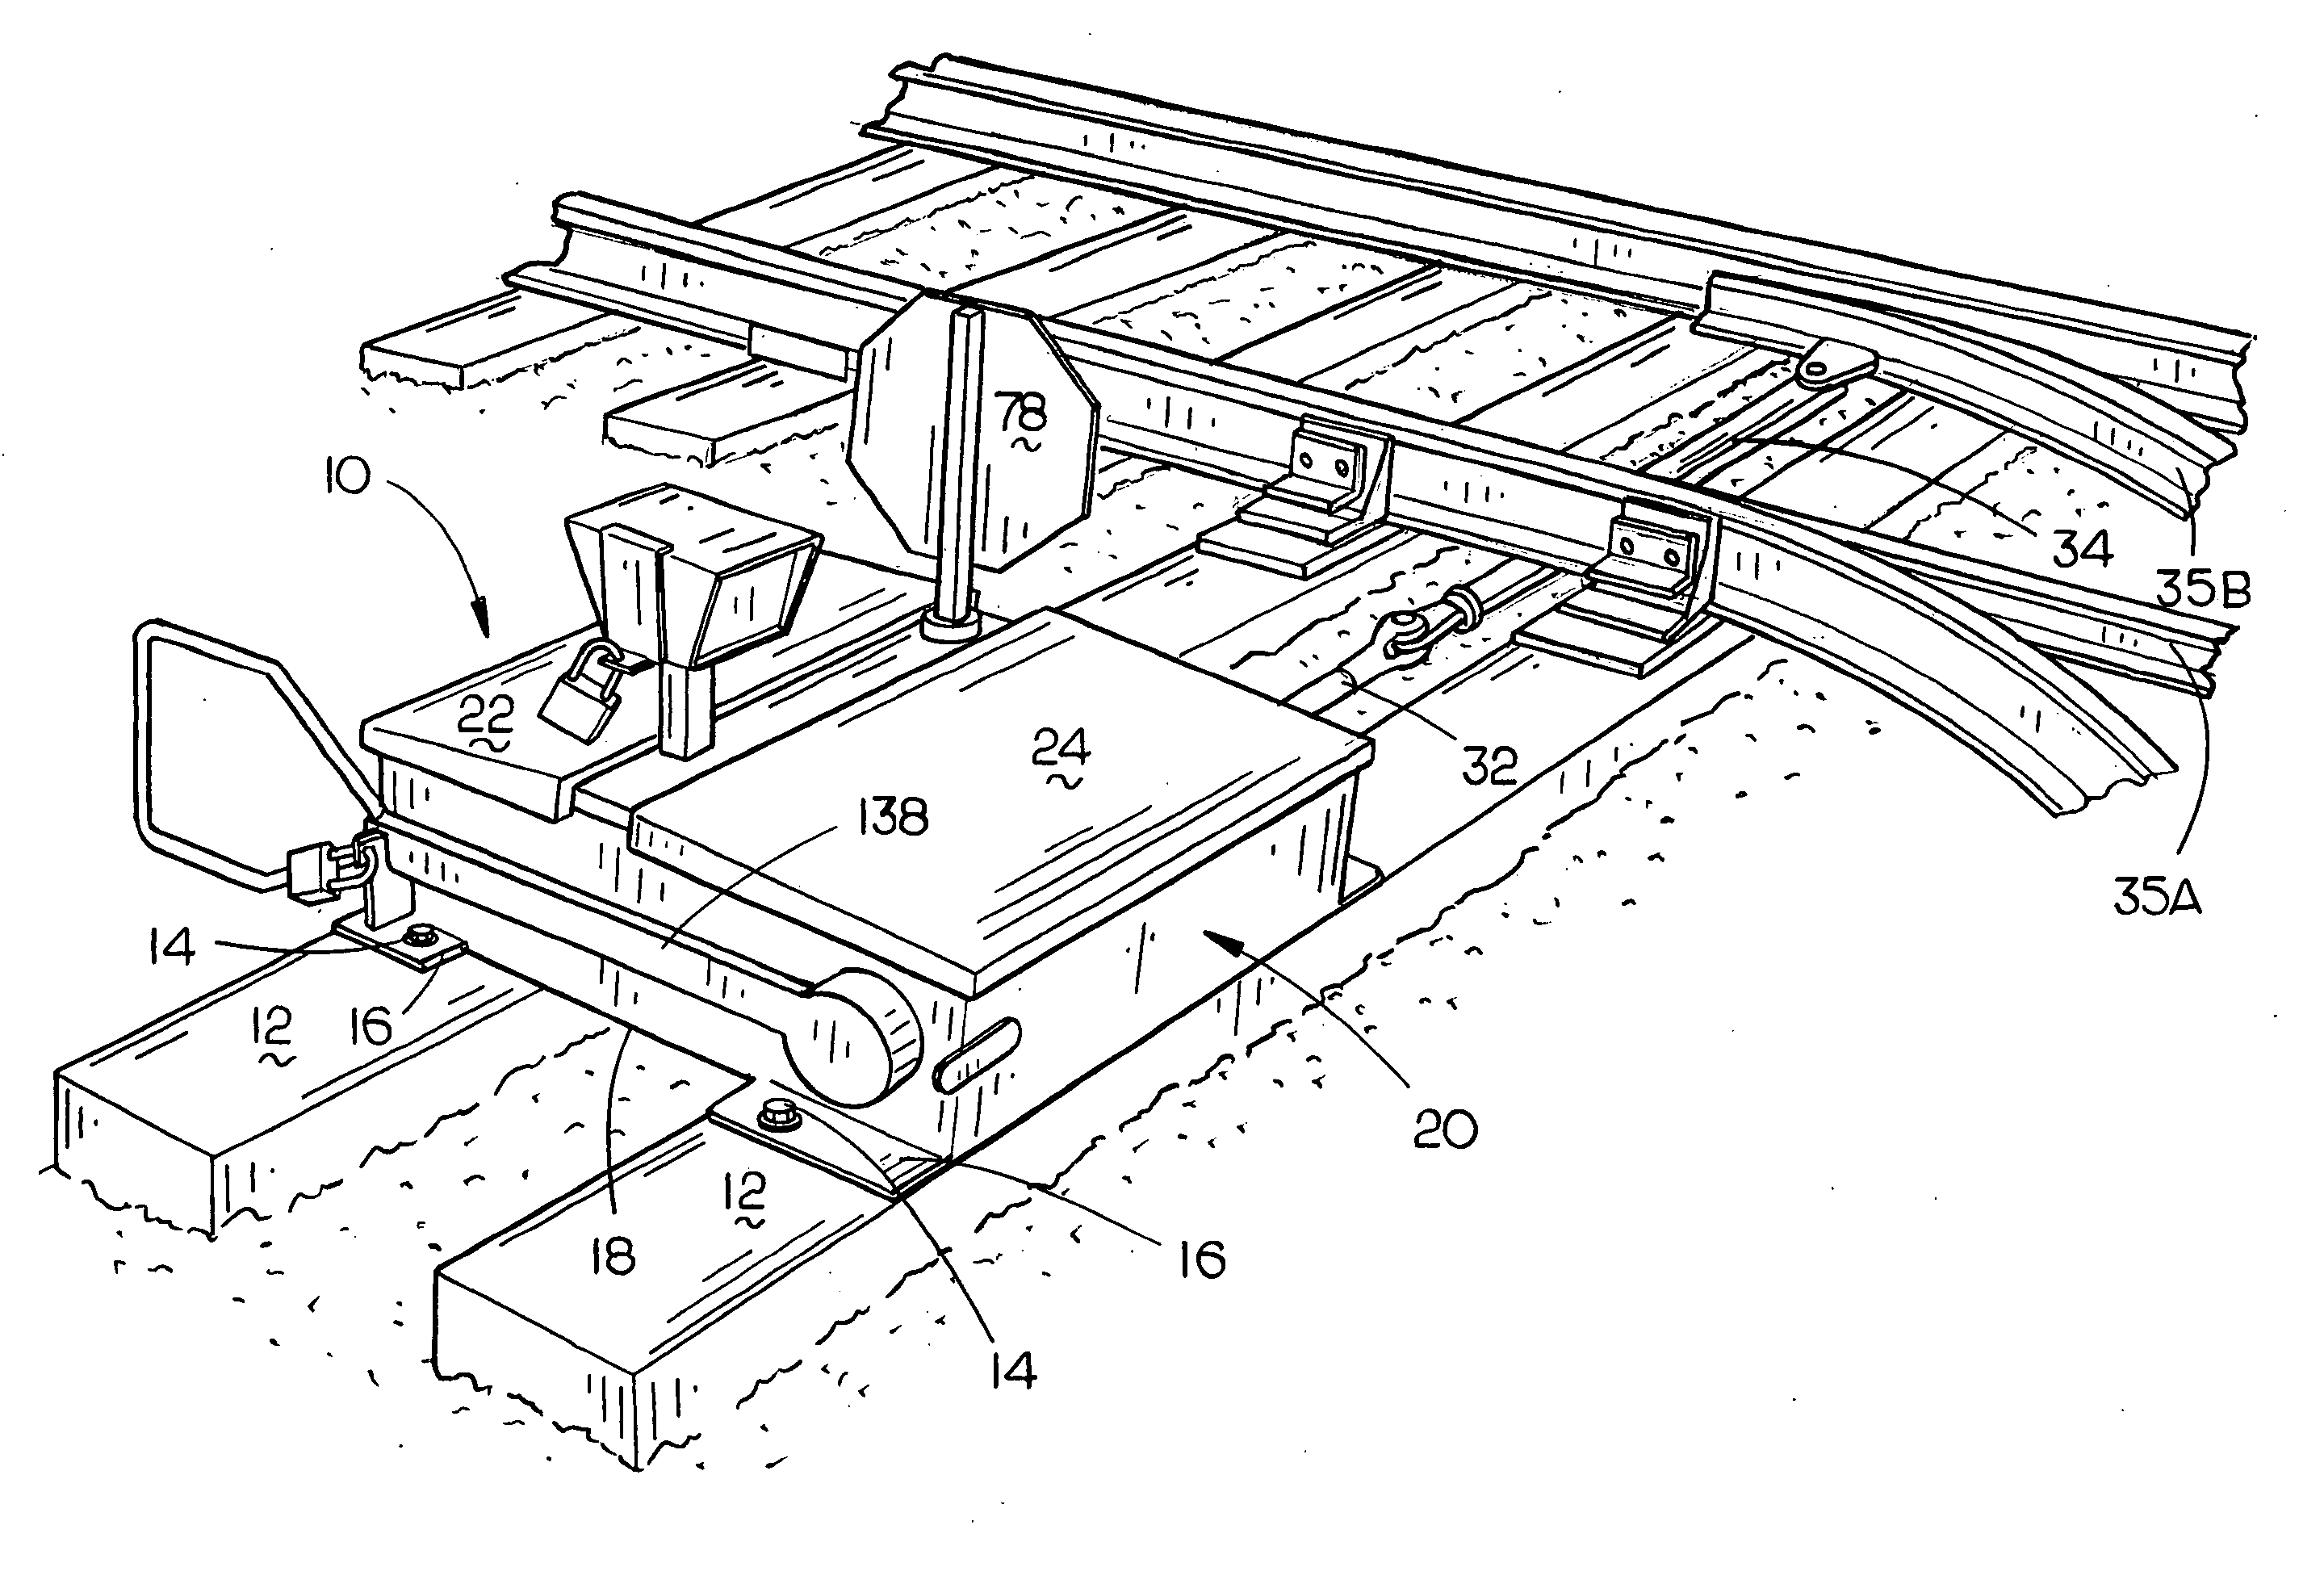 Railroad yard switch machine